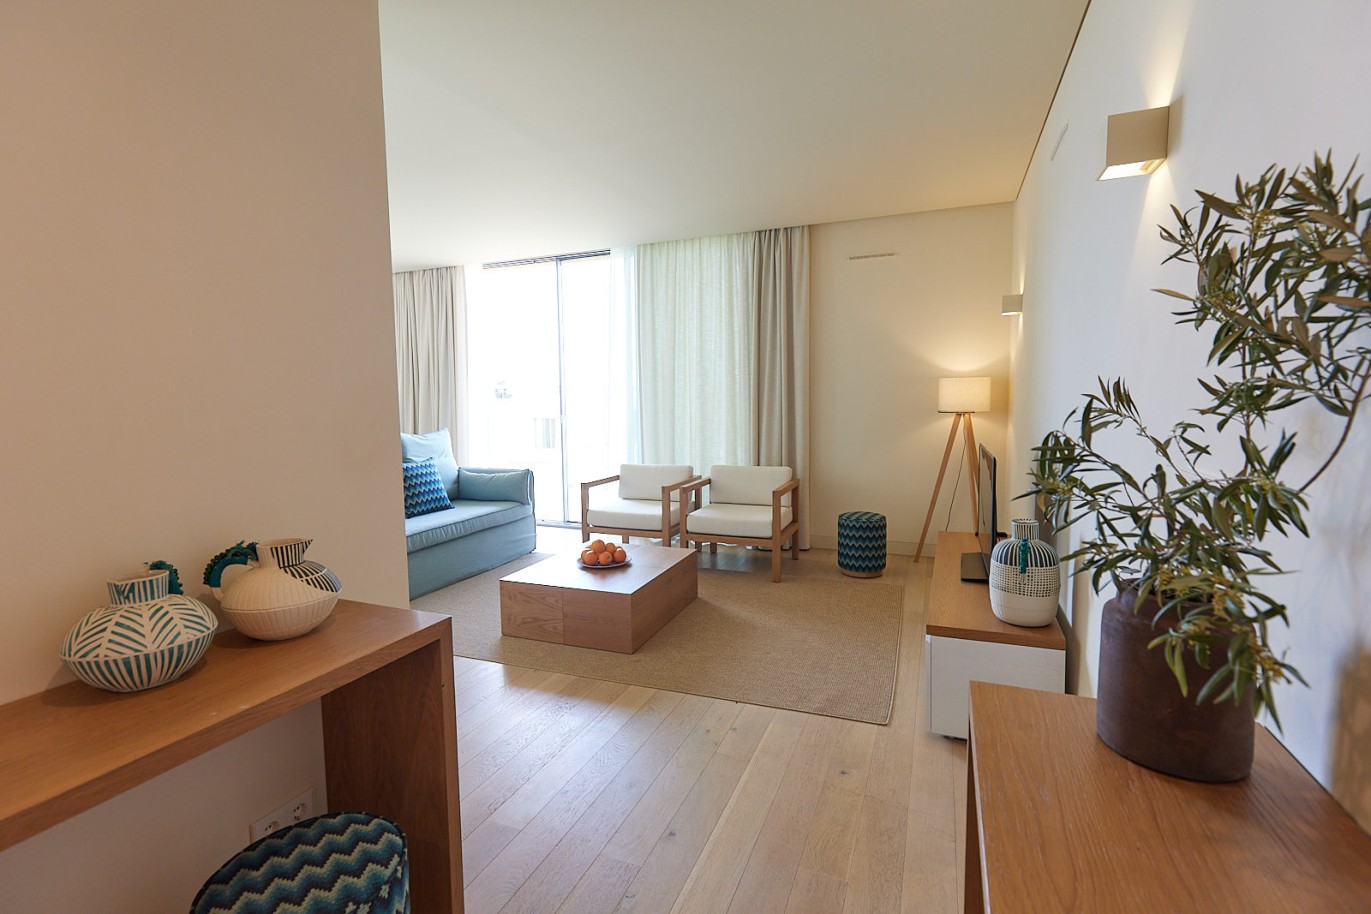 3 bedroom apartment in resort, for sale in Porches, Algarve_228605